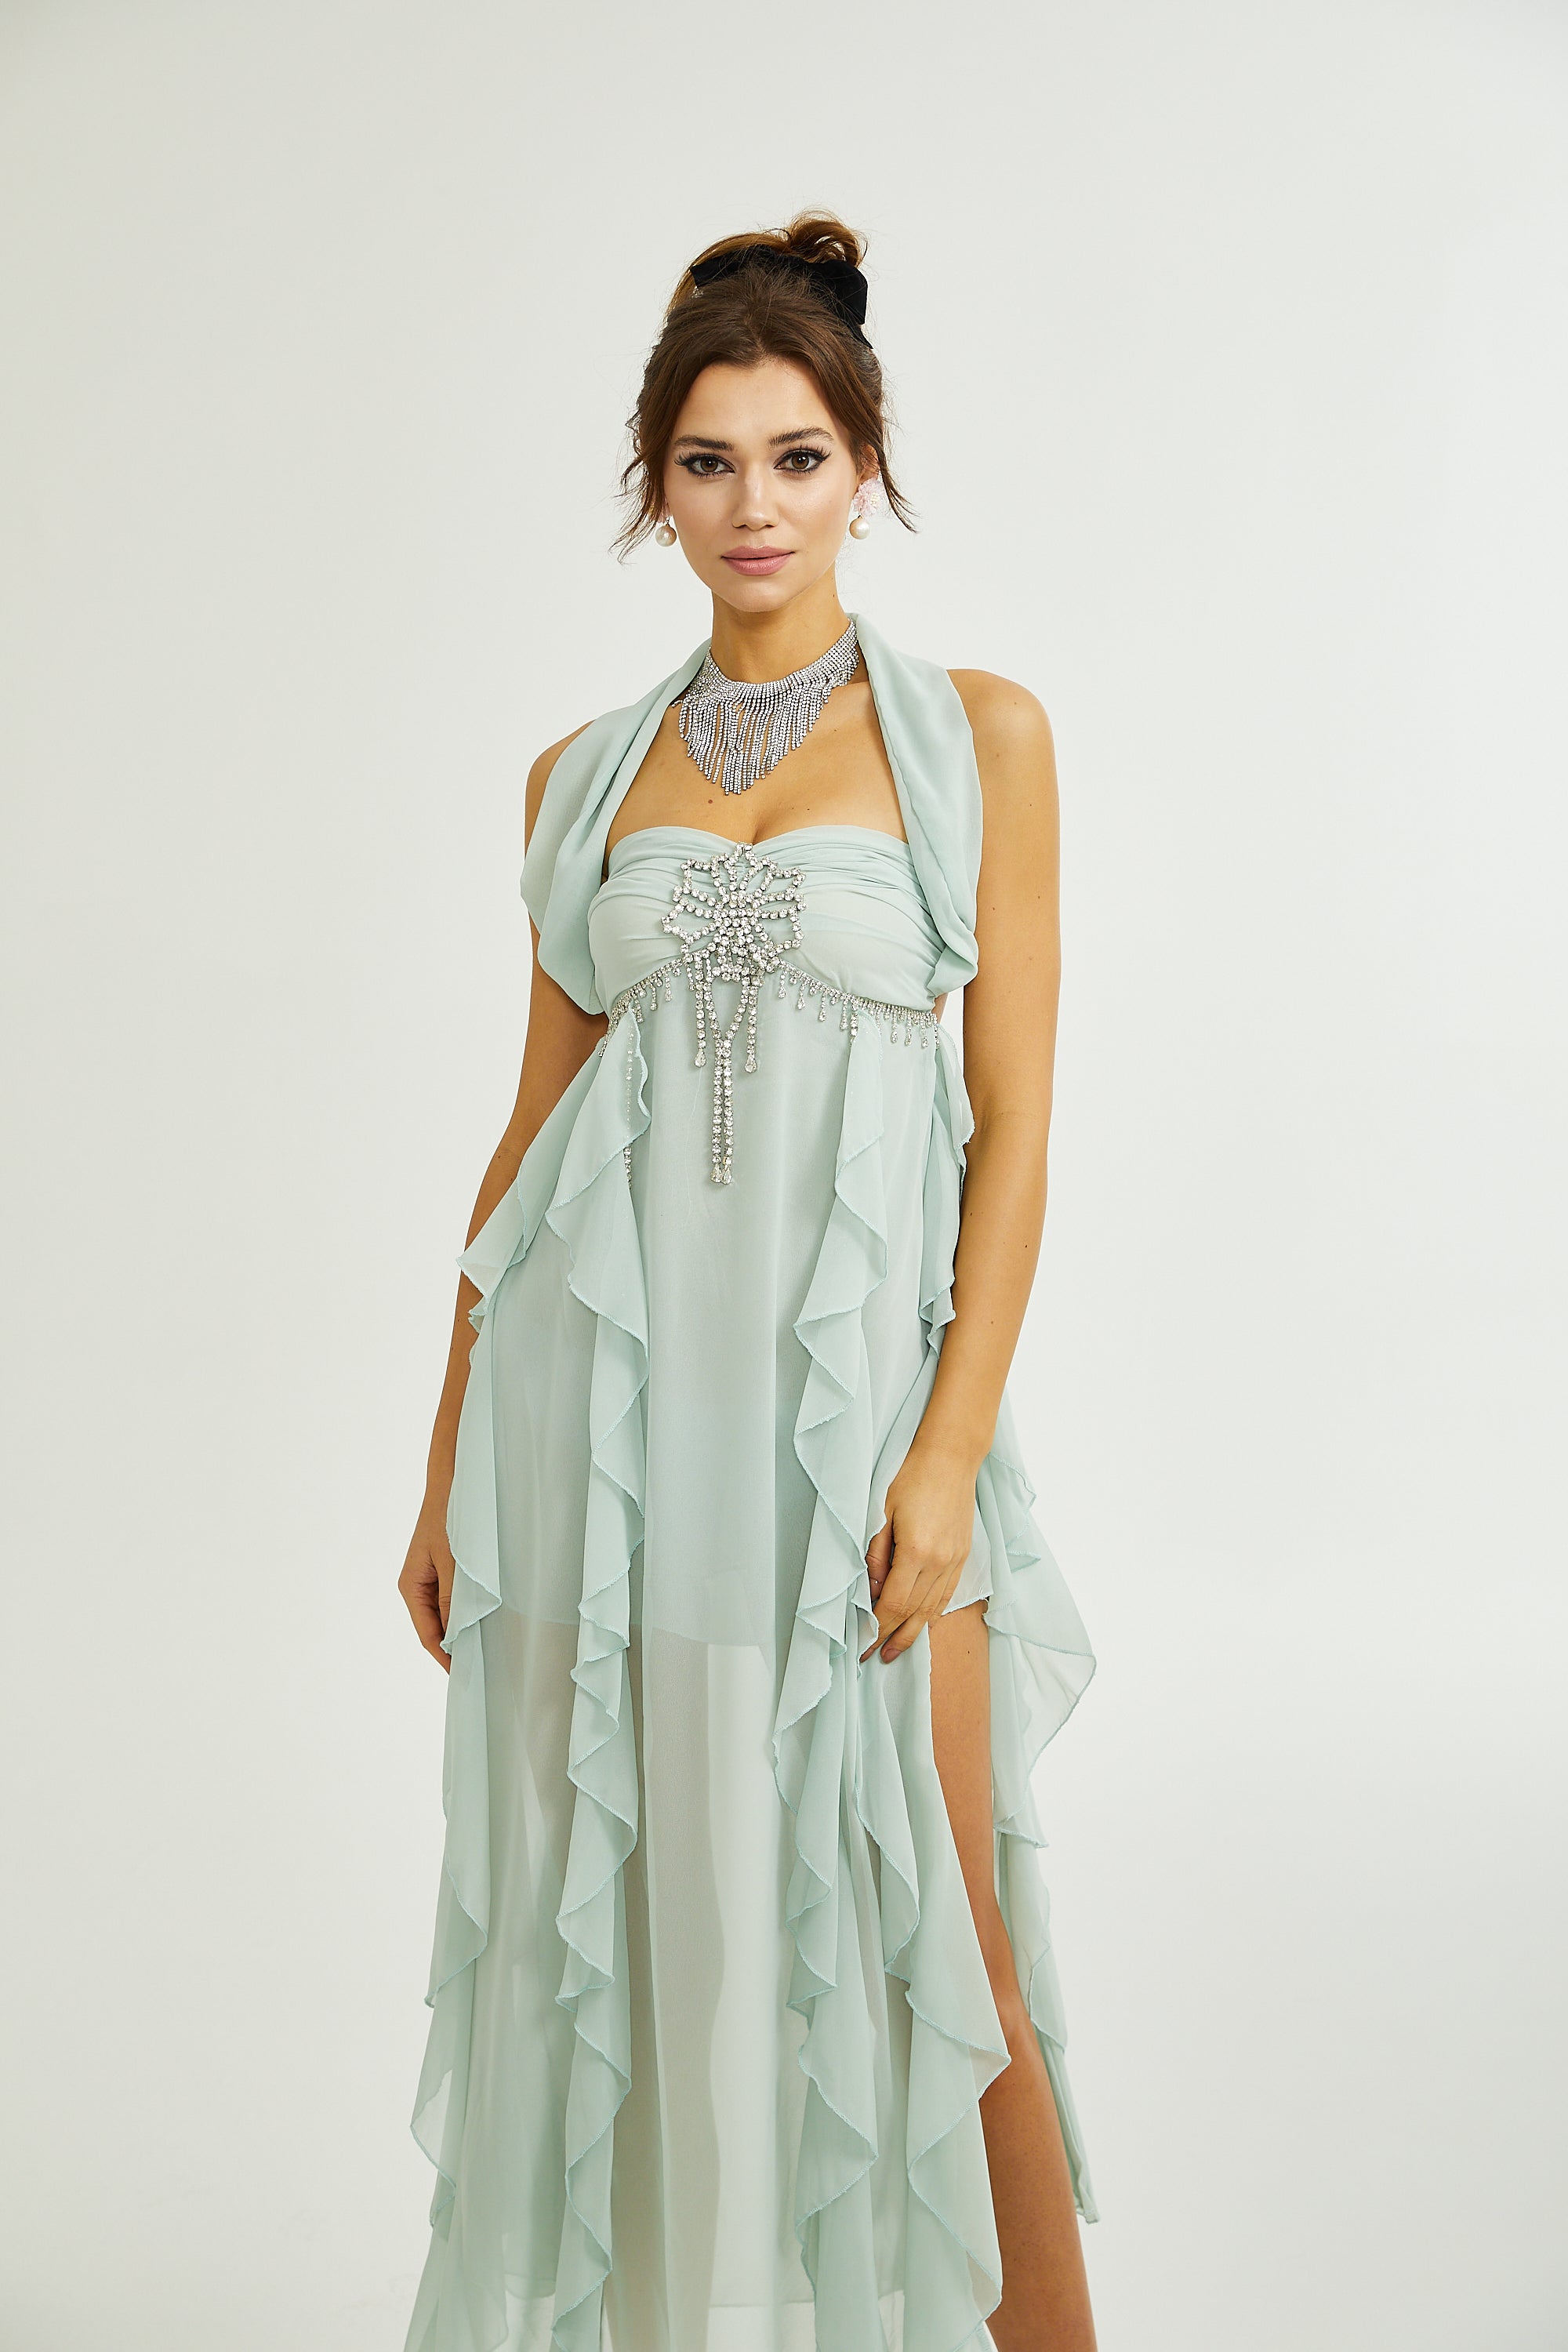 Salilah embellished ruffled dress